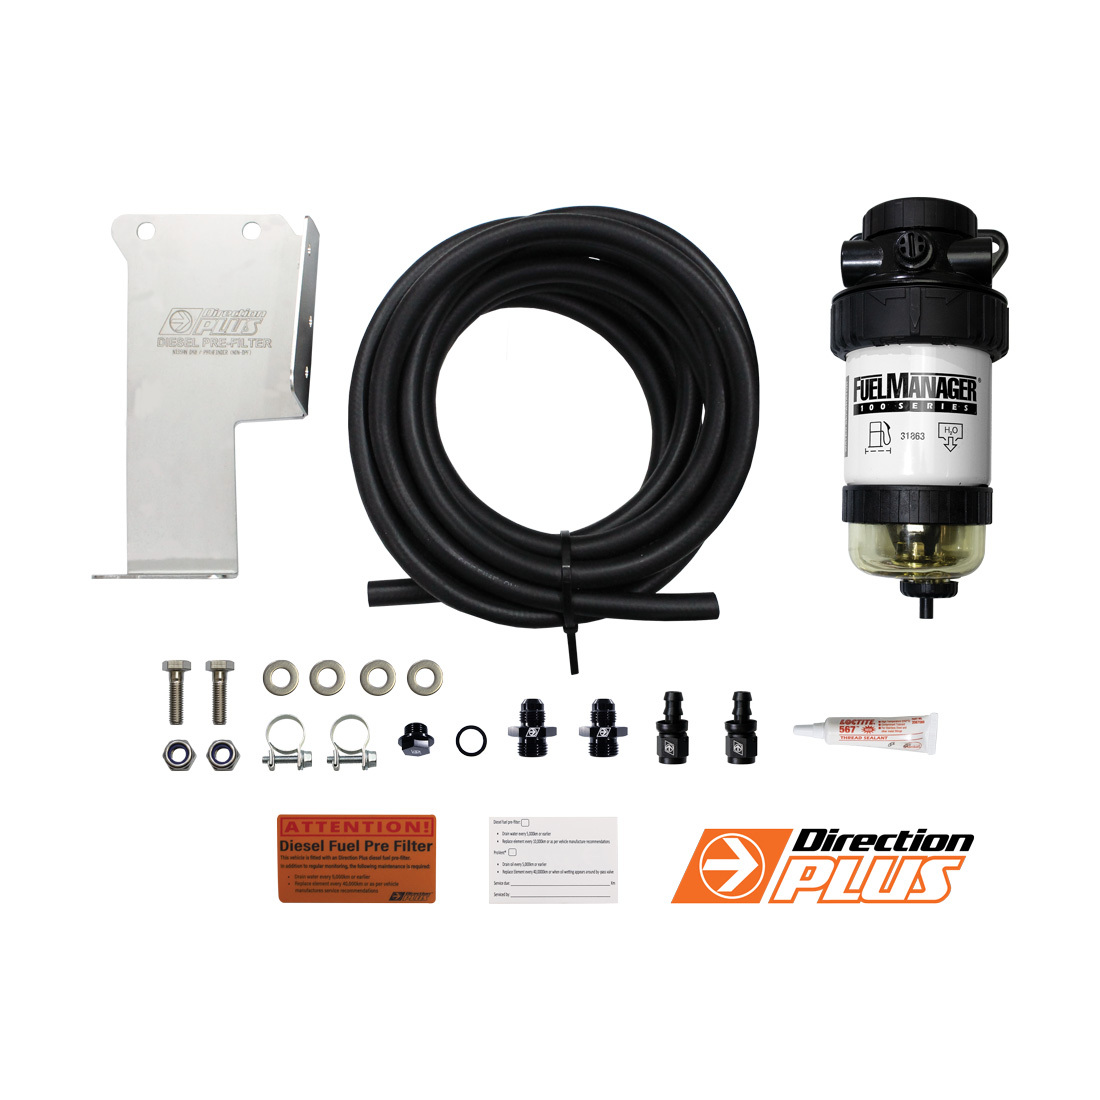 Fuel Manager Pre-Filter Kit For Nissan Navara D40 2.5L YD25DDTi 2005 - 2015